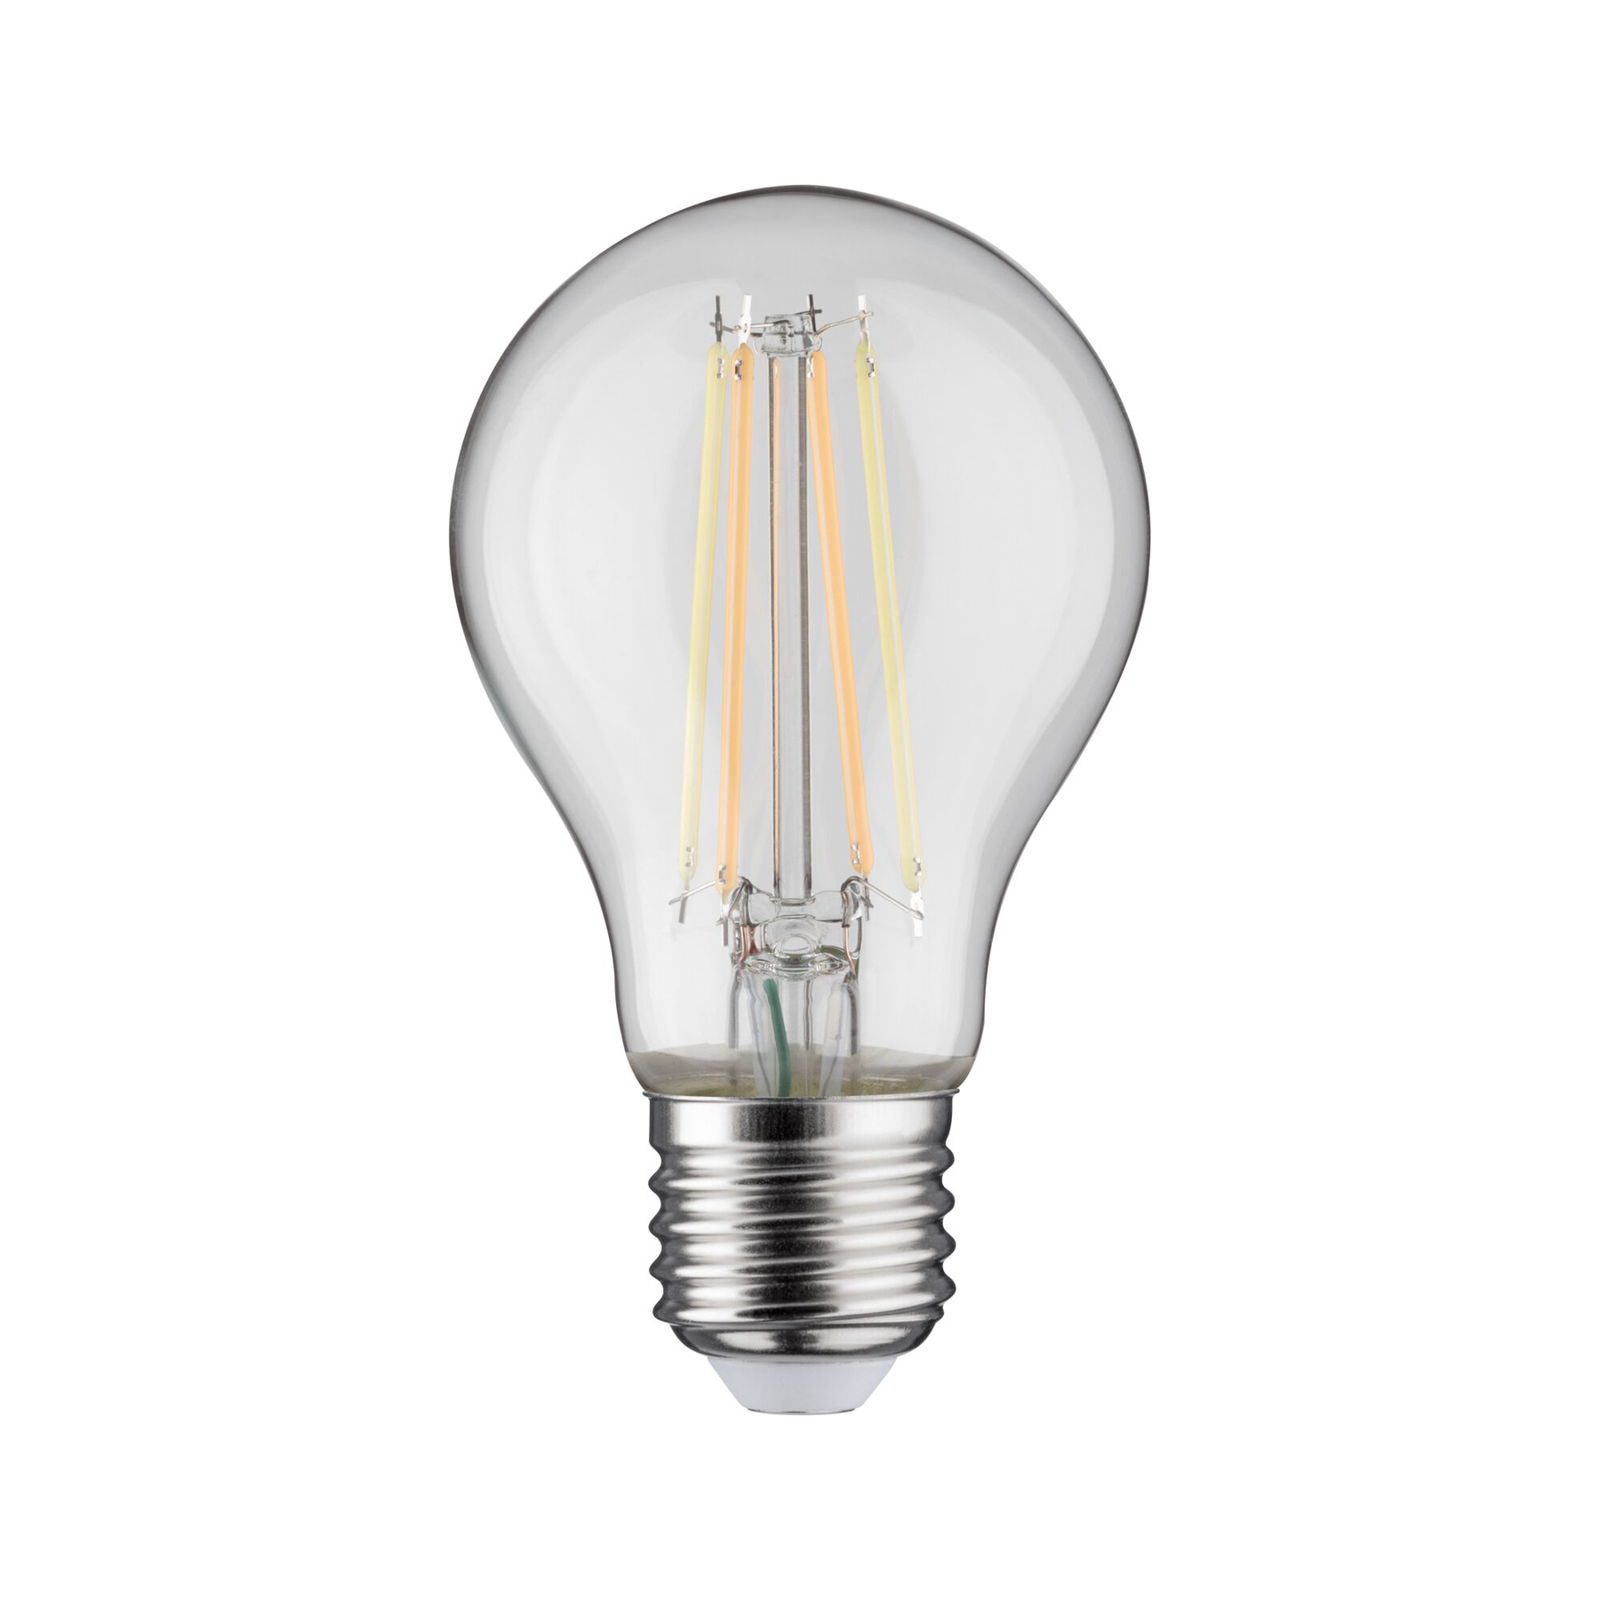 Paulmann Smart Home Bundle ZigBee 4x E27 7W LED žiarovka CCT